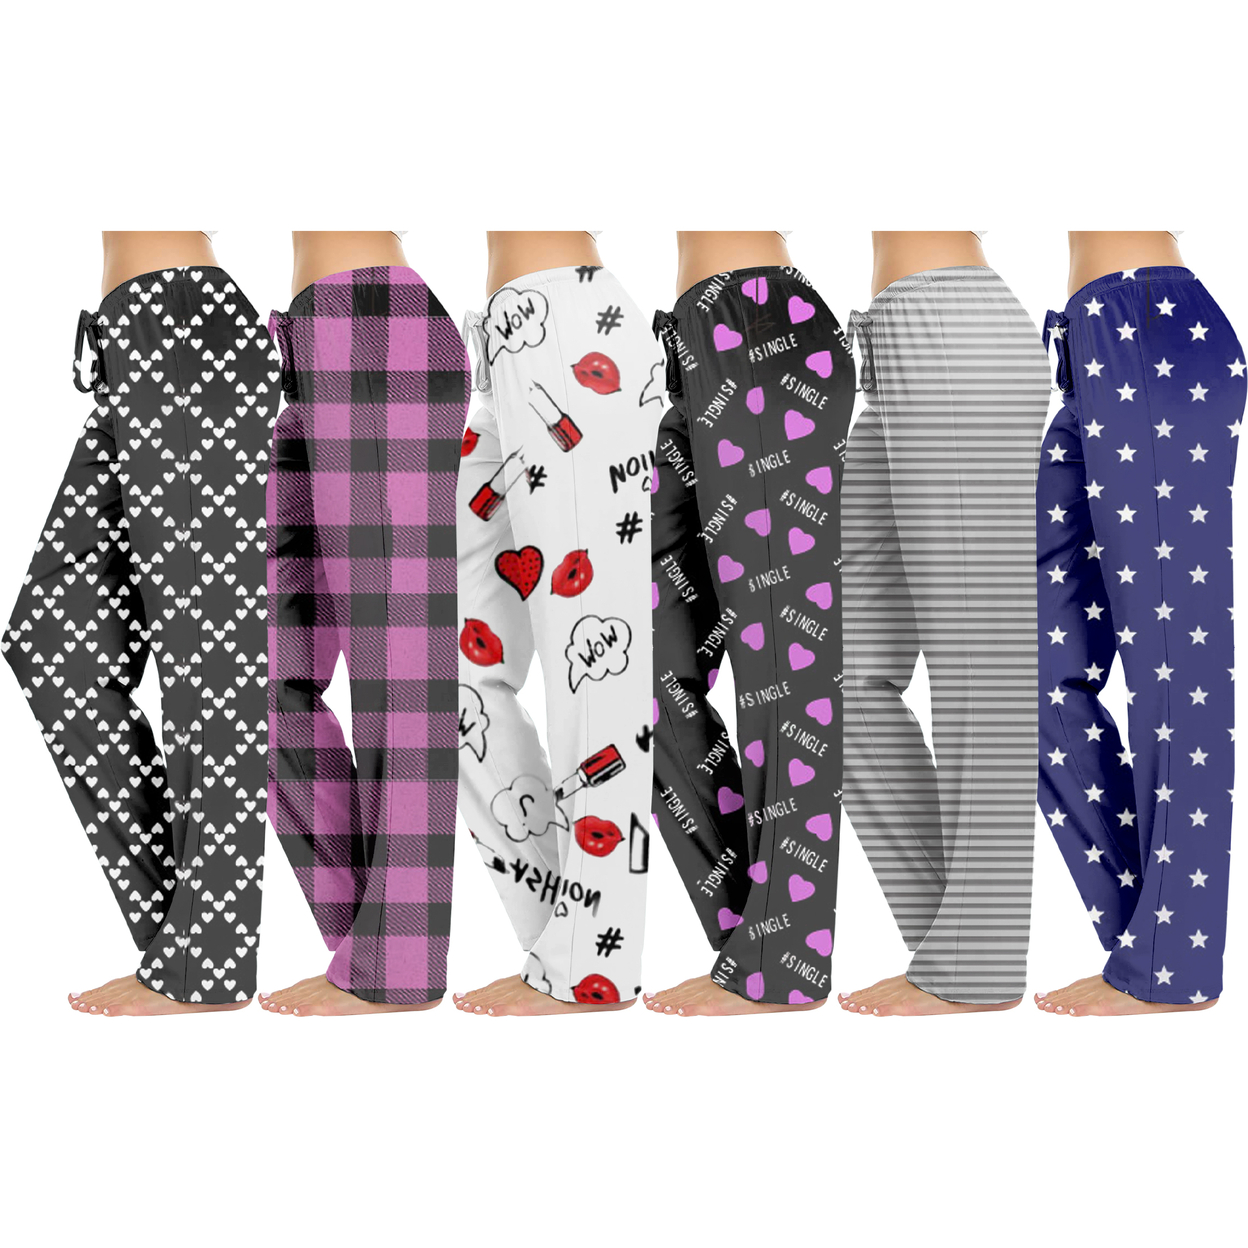 2-Pack: Women's Casual Fun Printed Lightweight Lounge Terry Knit Pajama Bottom Pants - Large, Love